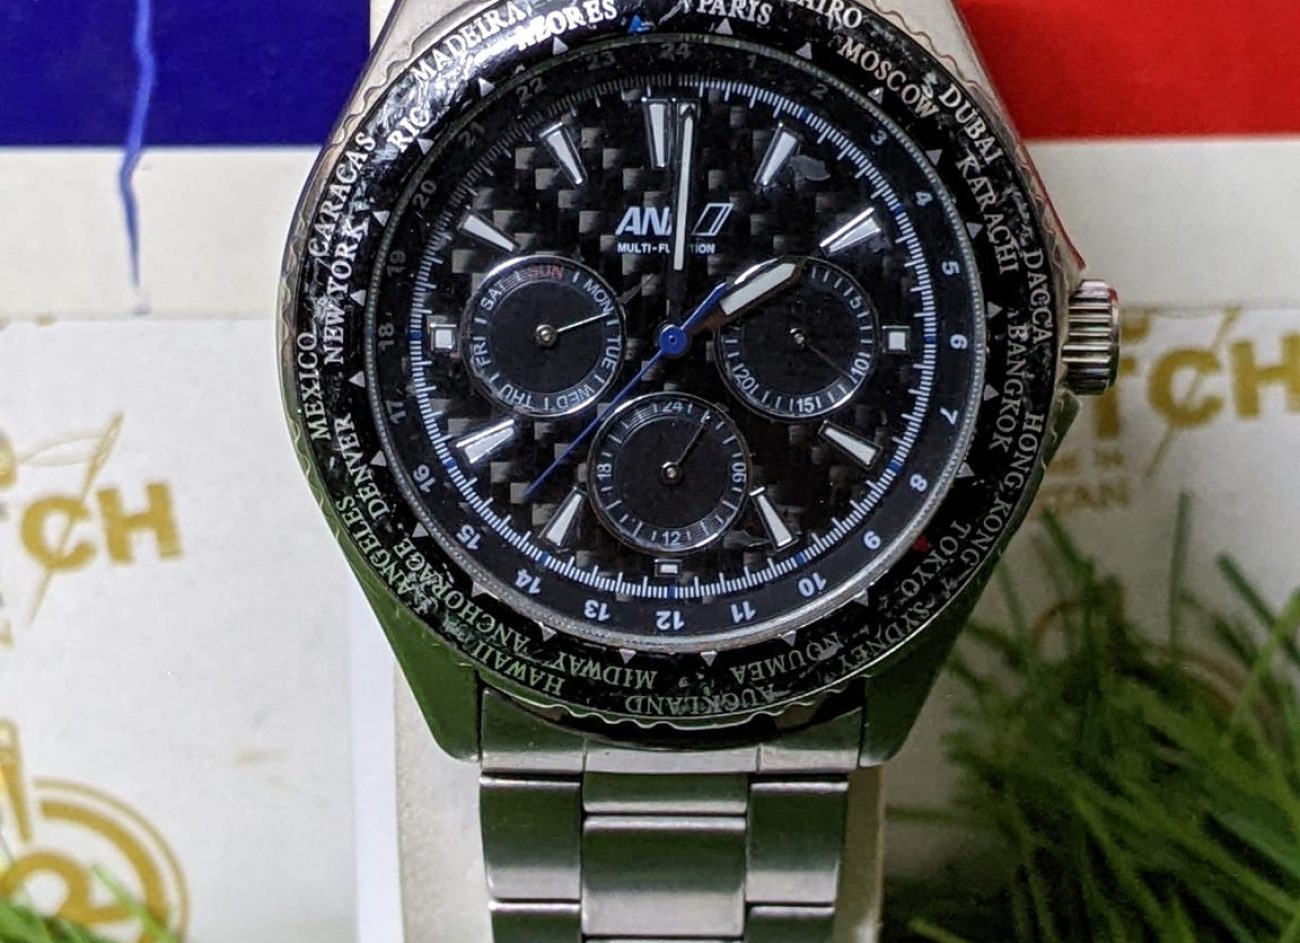 Citizen ANA 7 multi functional black dial watch for men